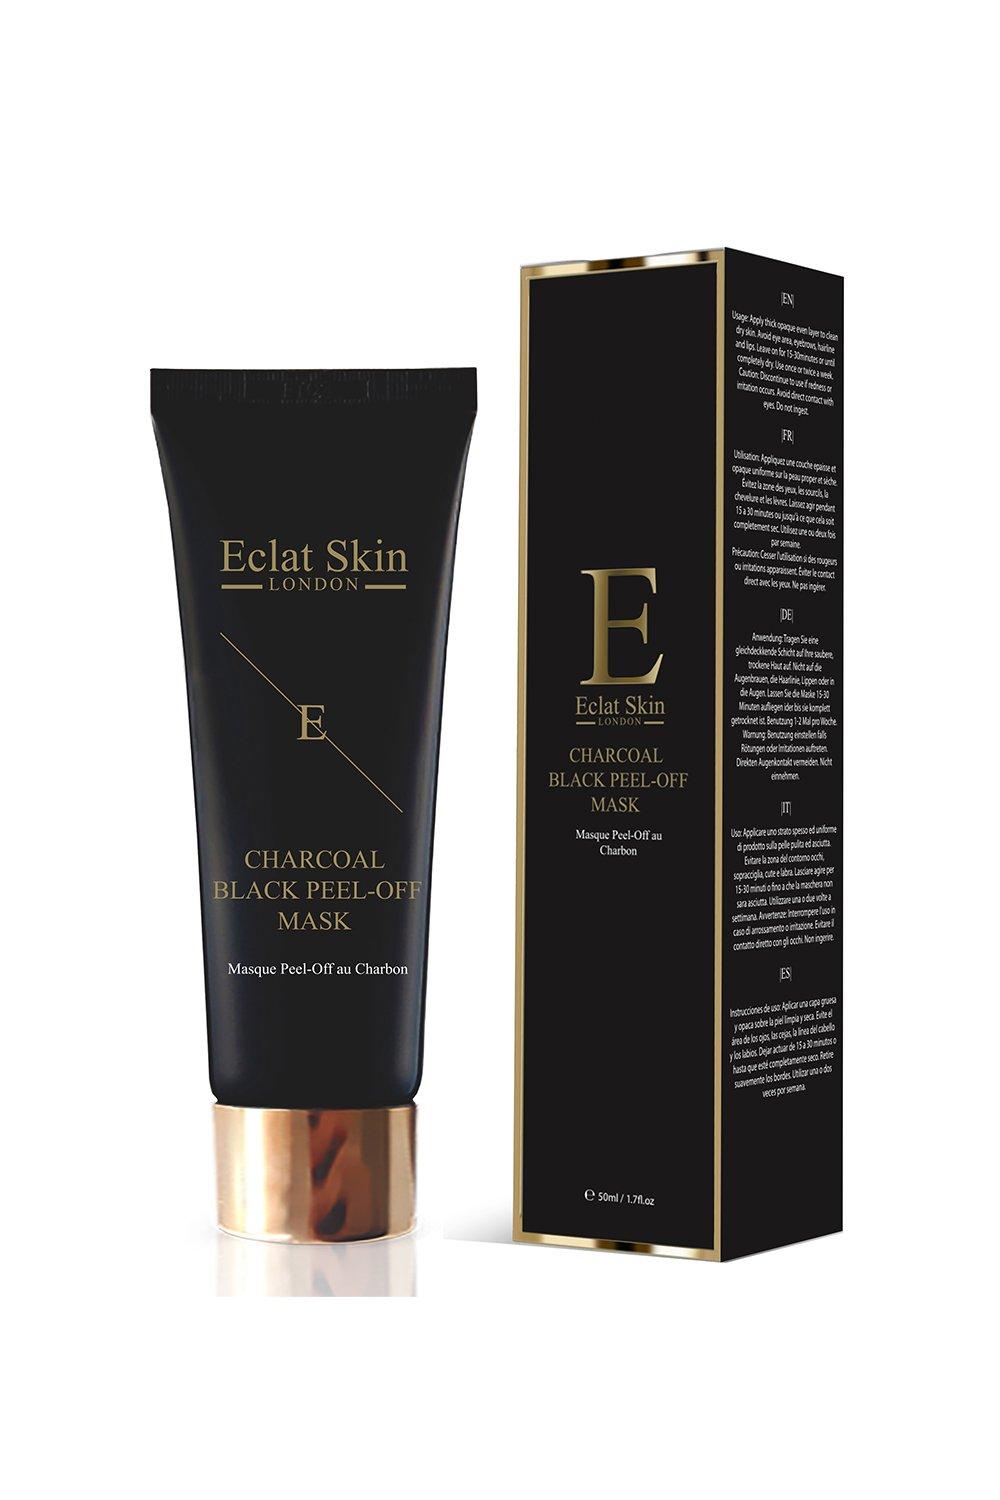 Eclat Skin London Women's Purifying Charcoal Black Peel-off Mask 24k Gold 50ml|white